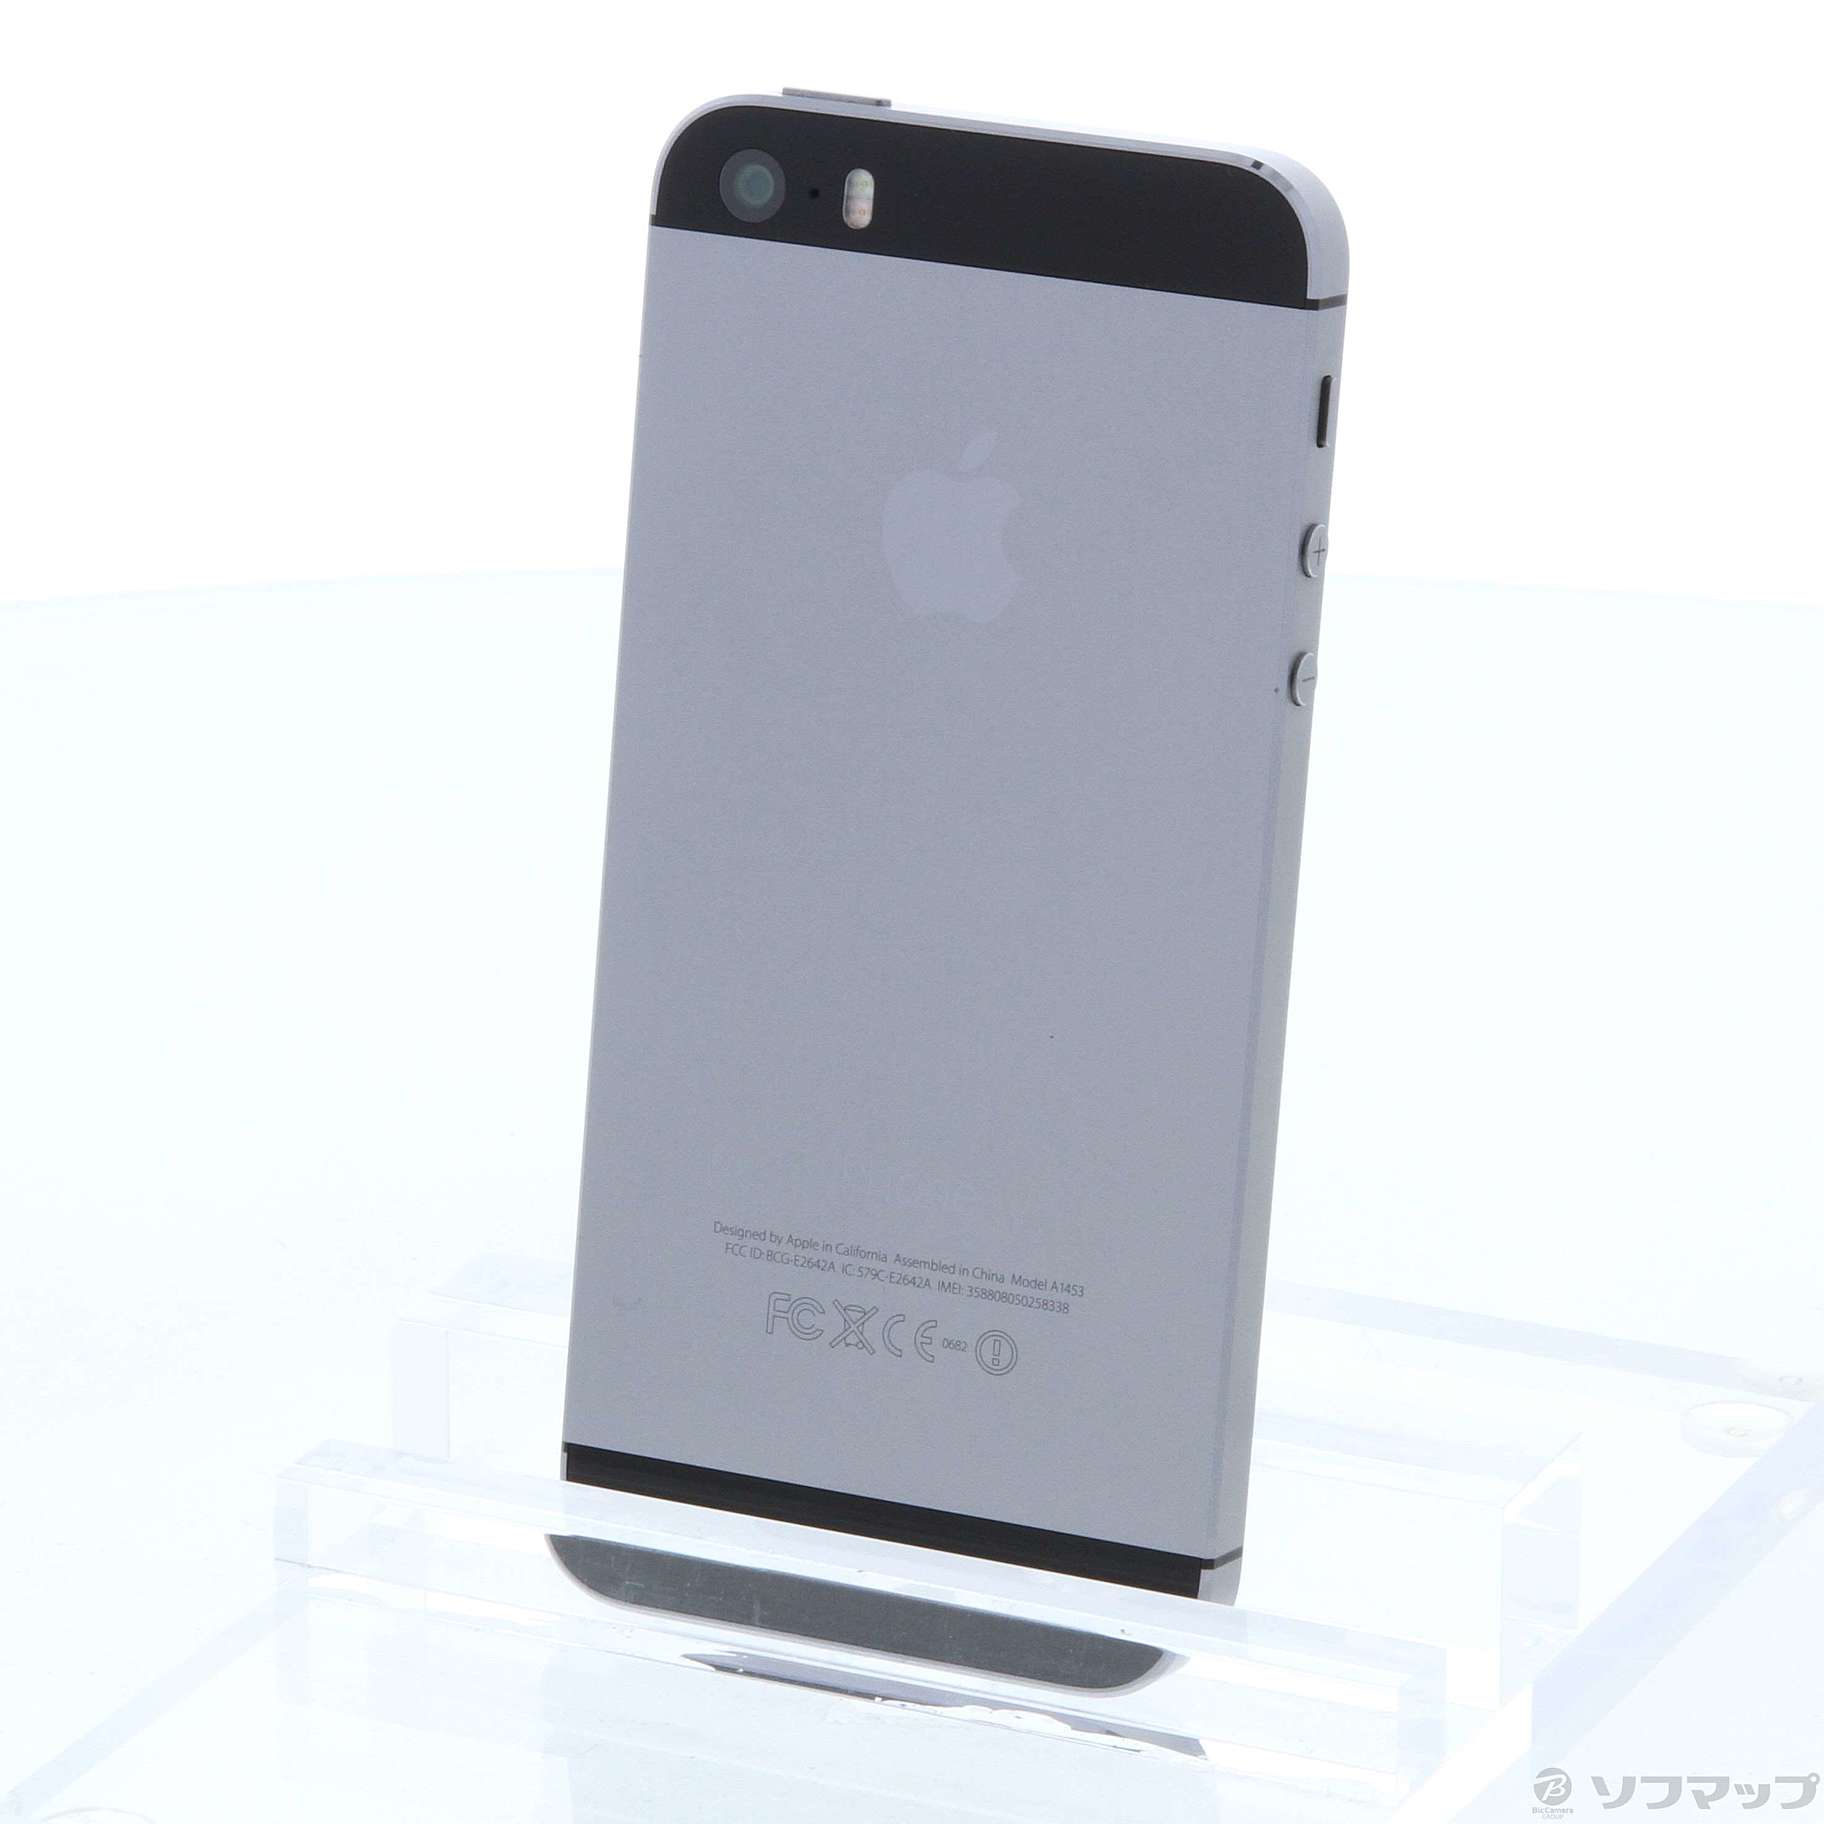 iPhone 5s Space Gray 64 GB Softbank